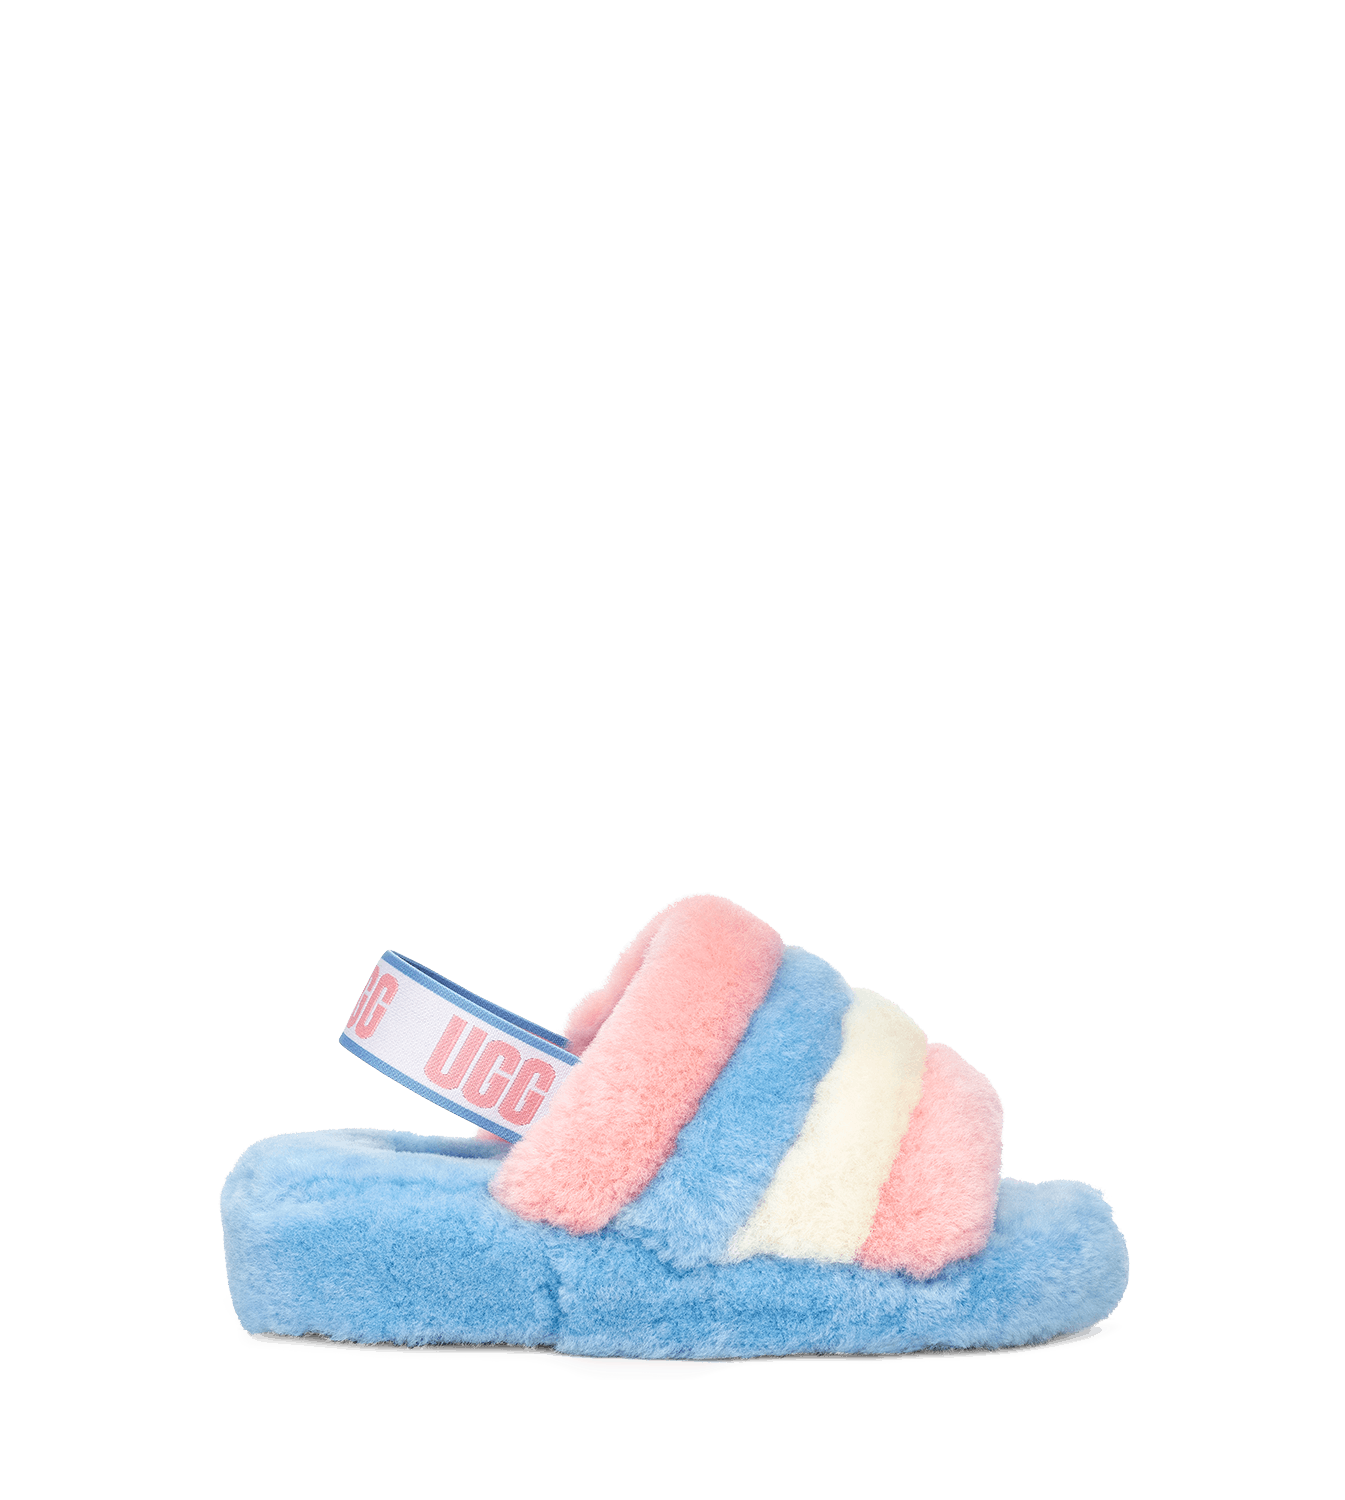 uggs sandals 2019